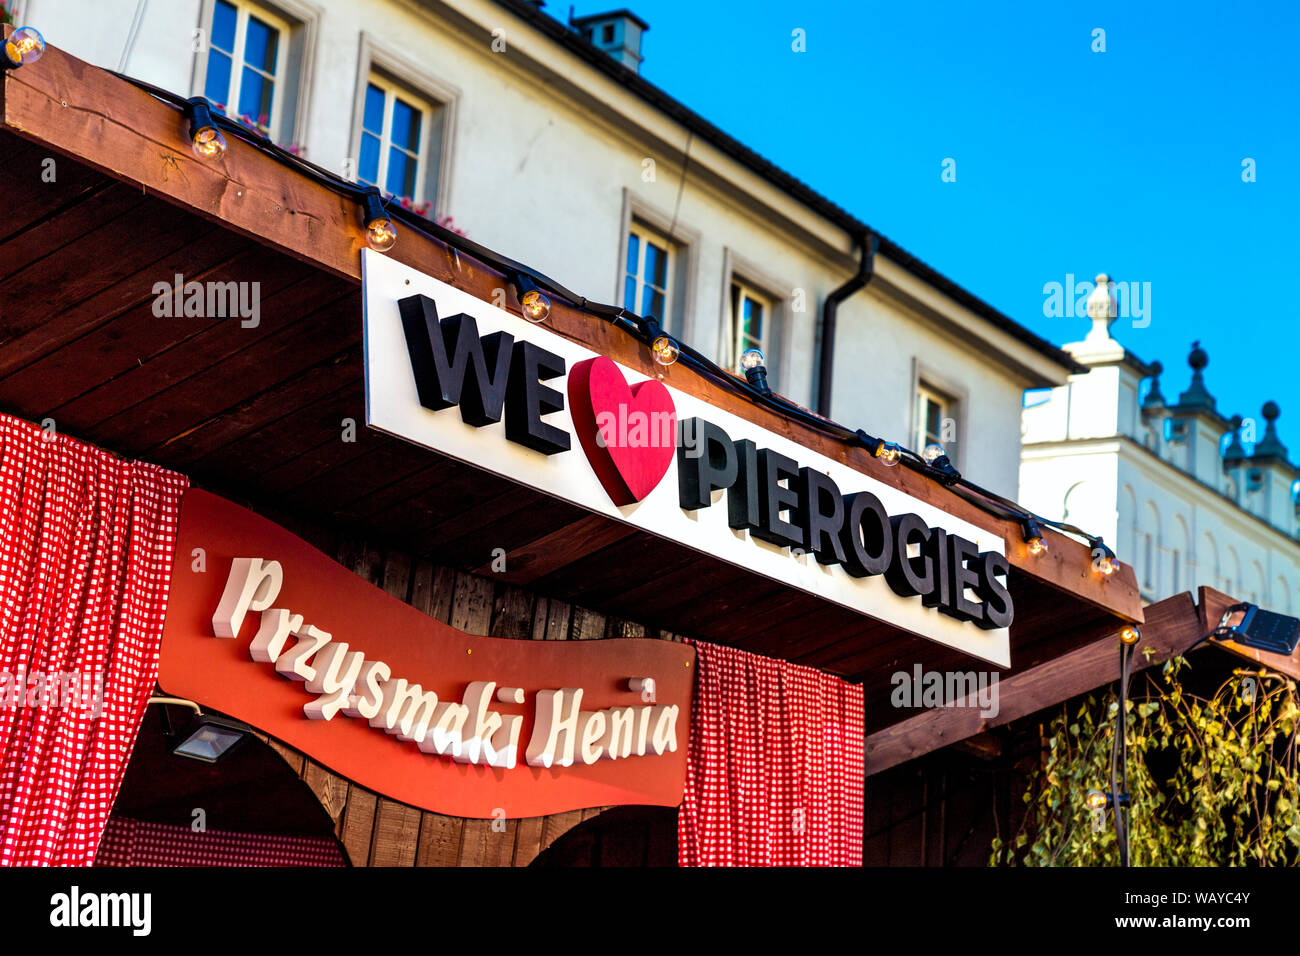 Przysmaki Henia pierogi va in mostra con lo slogan 'We Love pierogies', 16° Festival Pierogi a Cracovia, Polonia Foto Stock